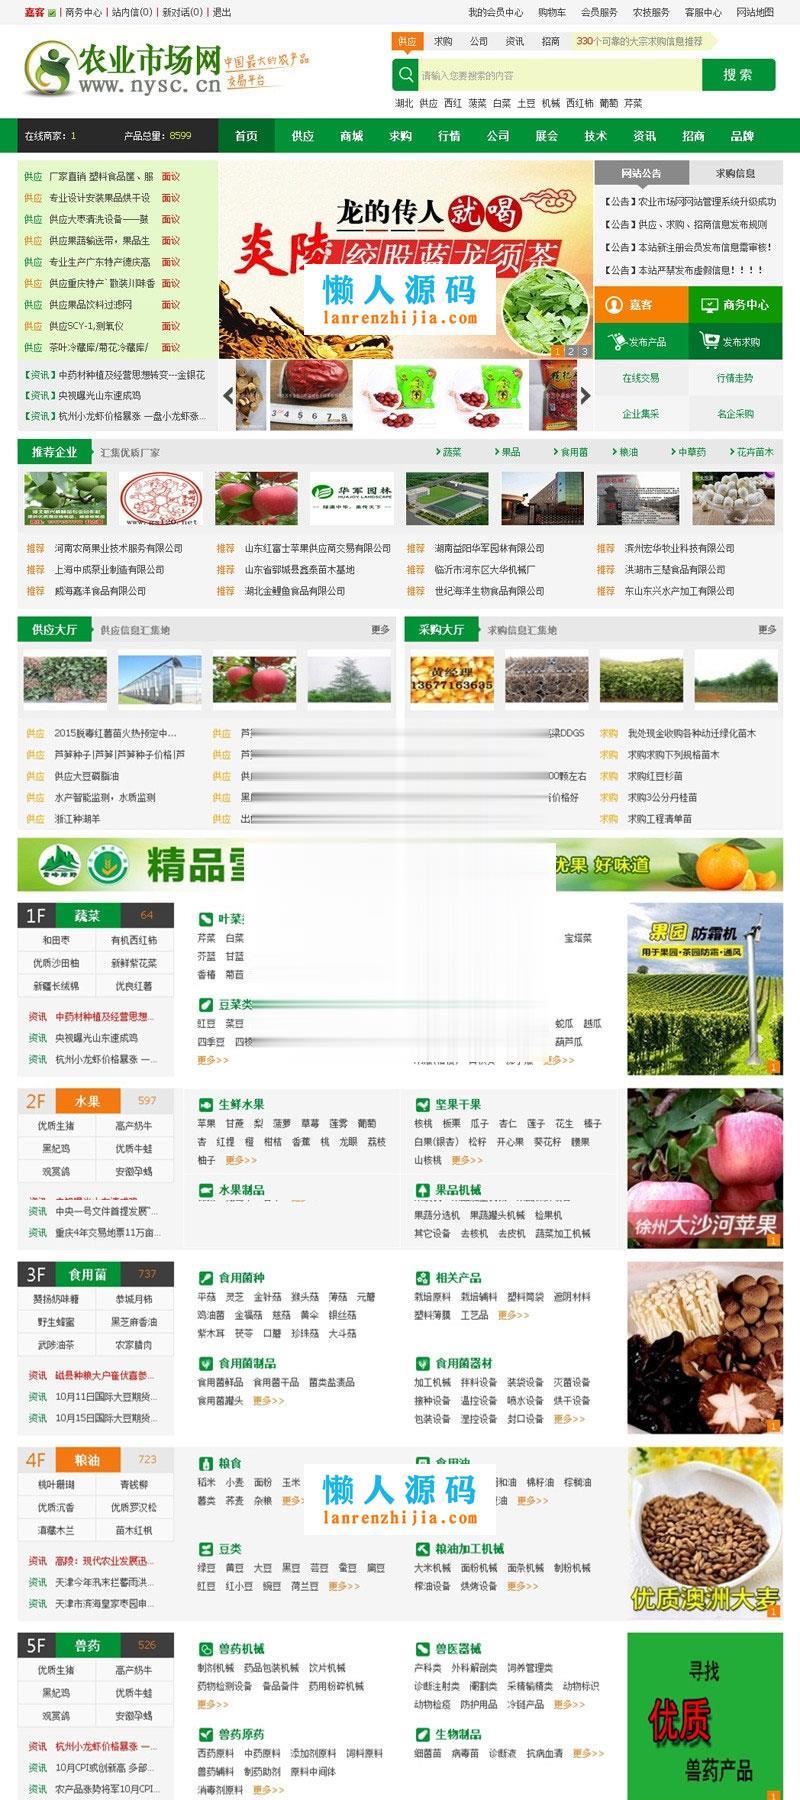 destoon6.0模板 仿绿色惠农网农业农产品交易平台网站源码 带手机WAP版